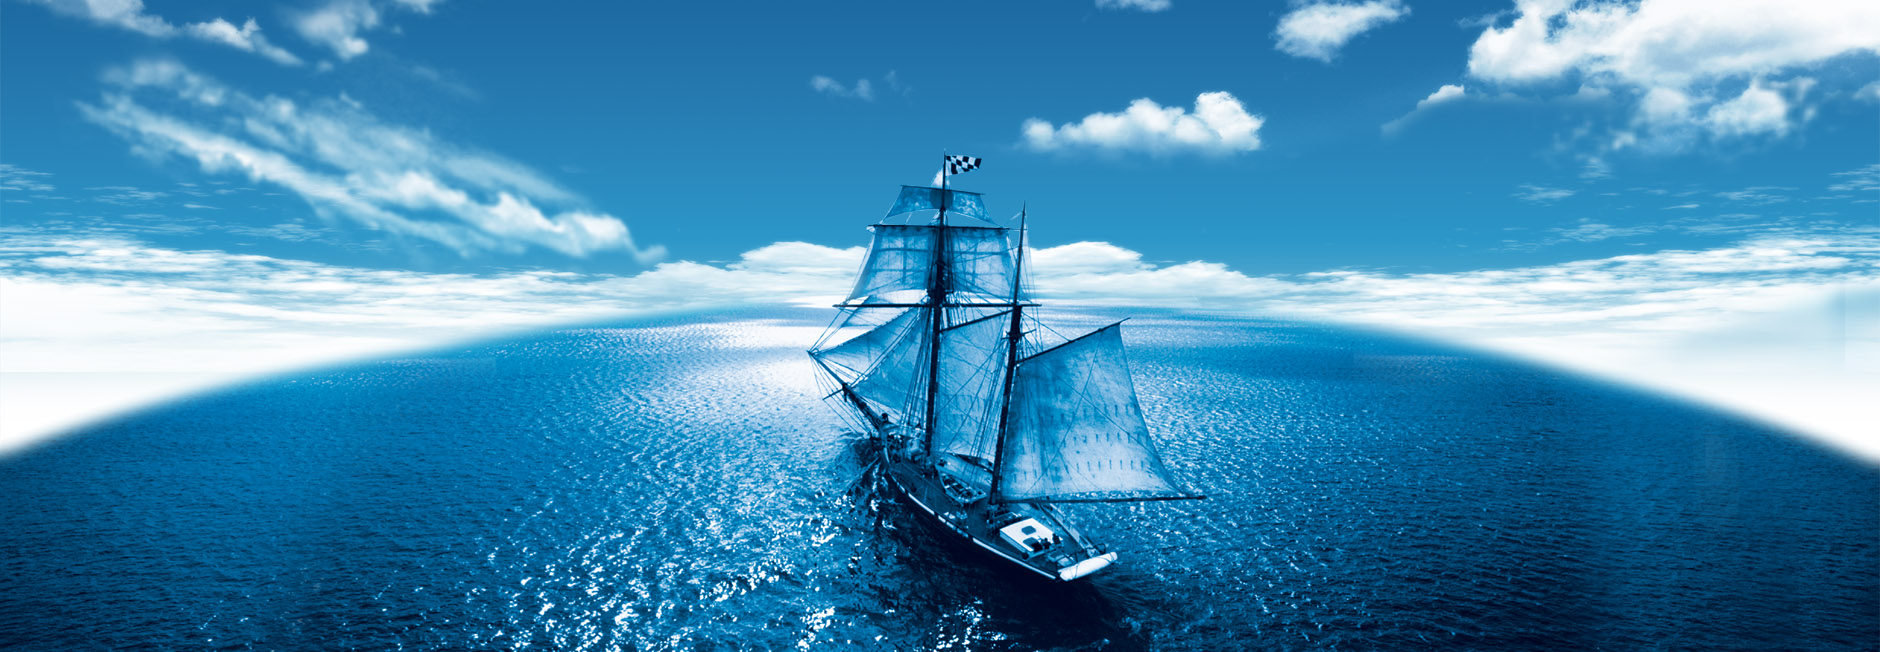 Make sail,create the future together